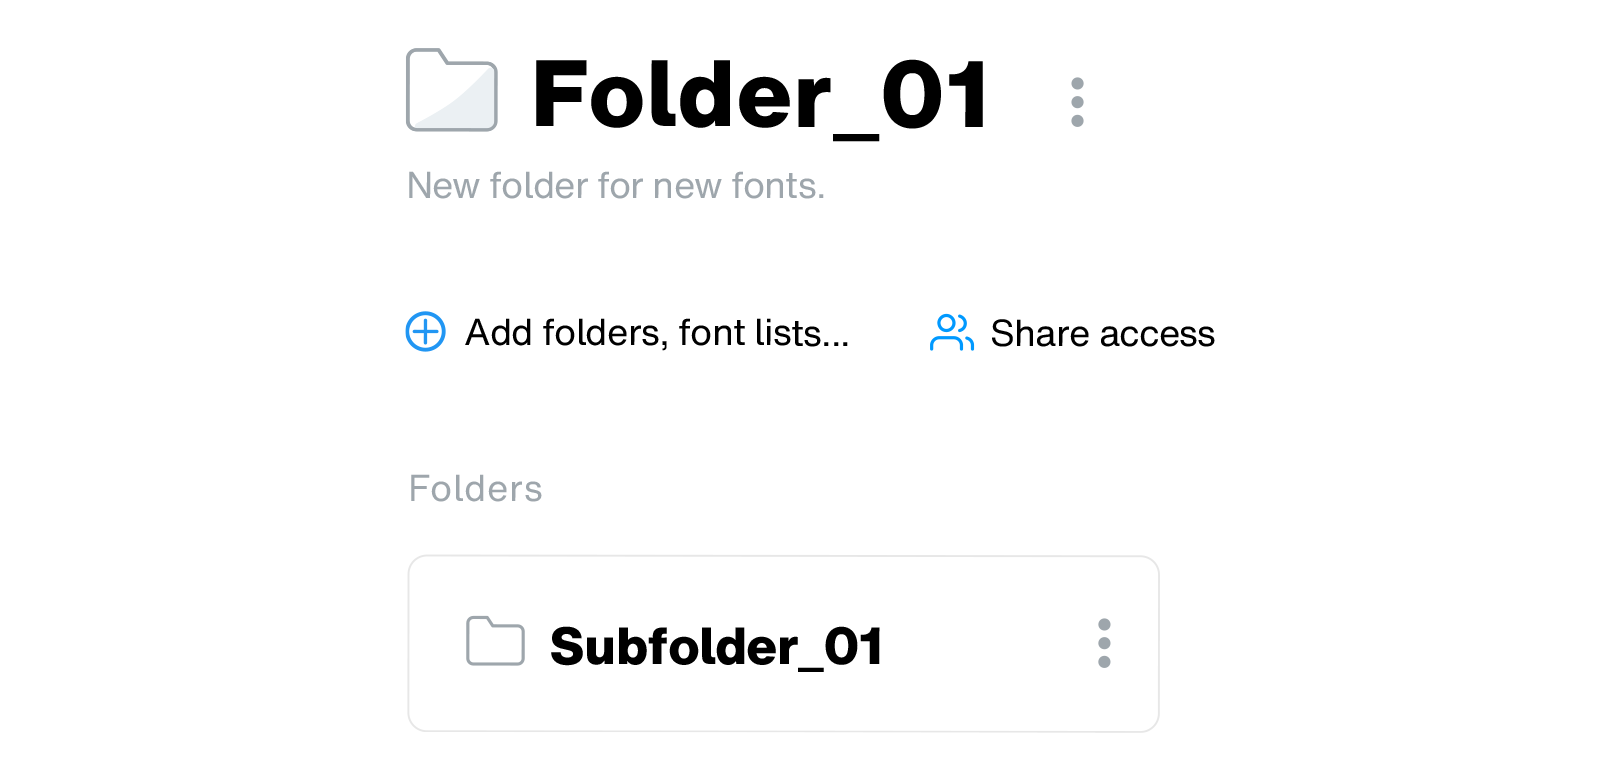 Folder structure 01